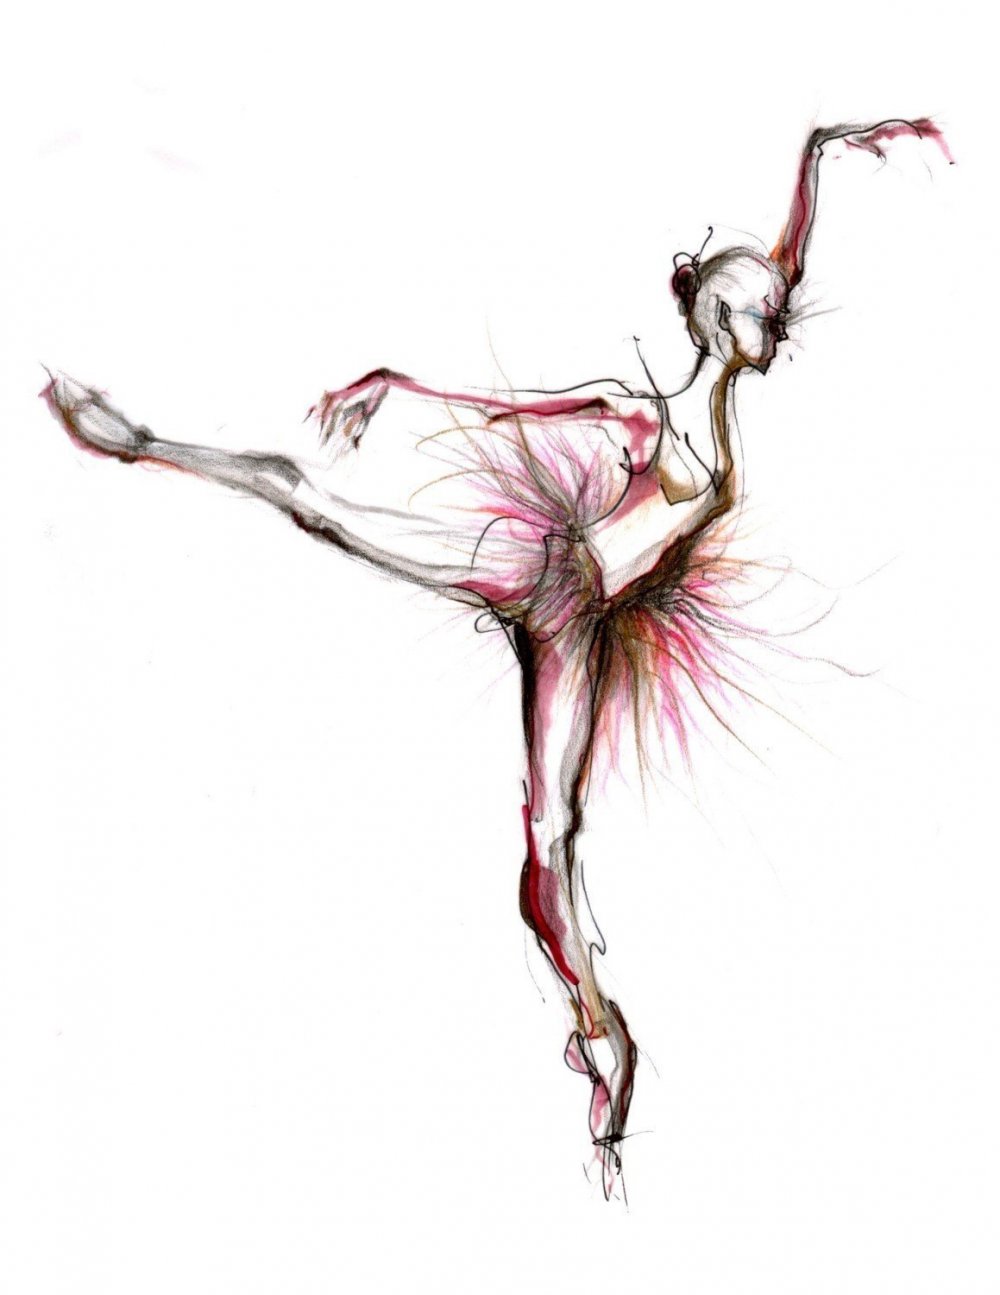 Балерина рисунок поэтапно